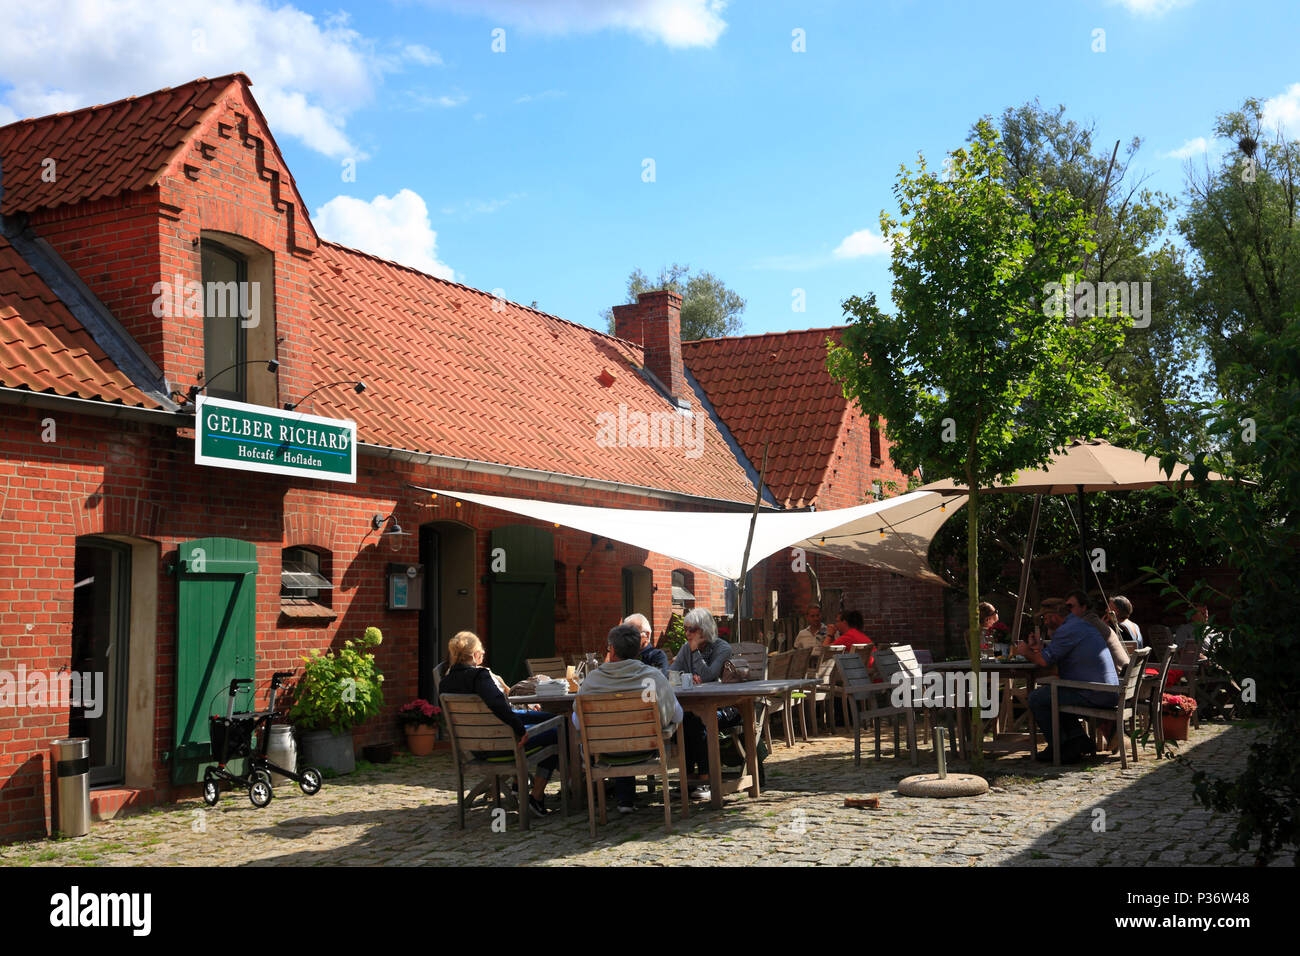 Cafe  GELBER RICHARD in Konau, Amt Neuhaus, Lower Saxony, Germany Stock Photo